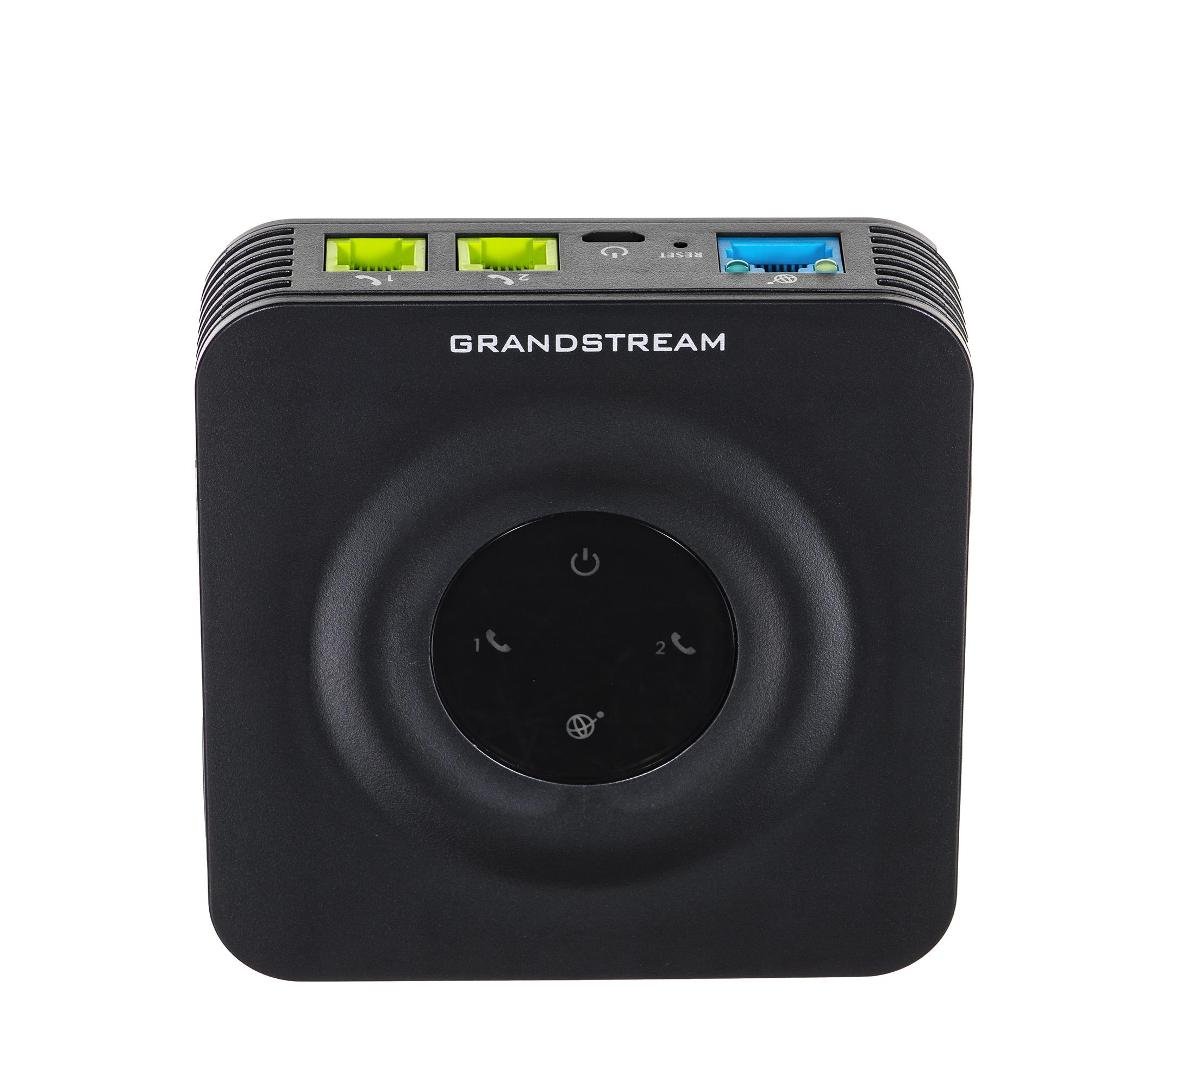 Grandstream Bramka VoIP 2xFXS HT802 NUGRSBR2P000000 [6752894]